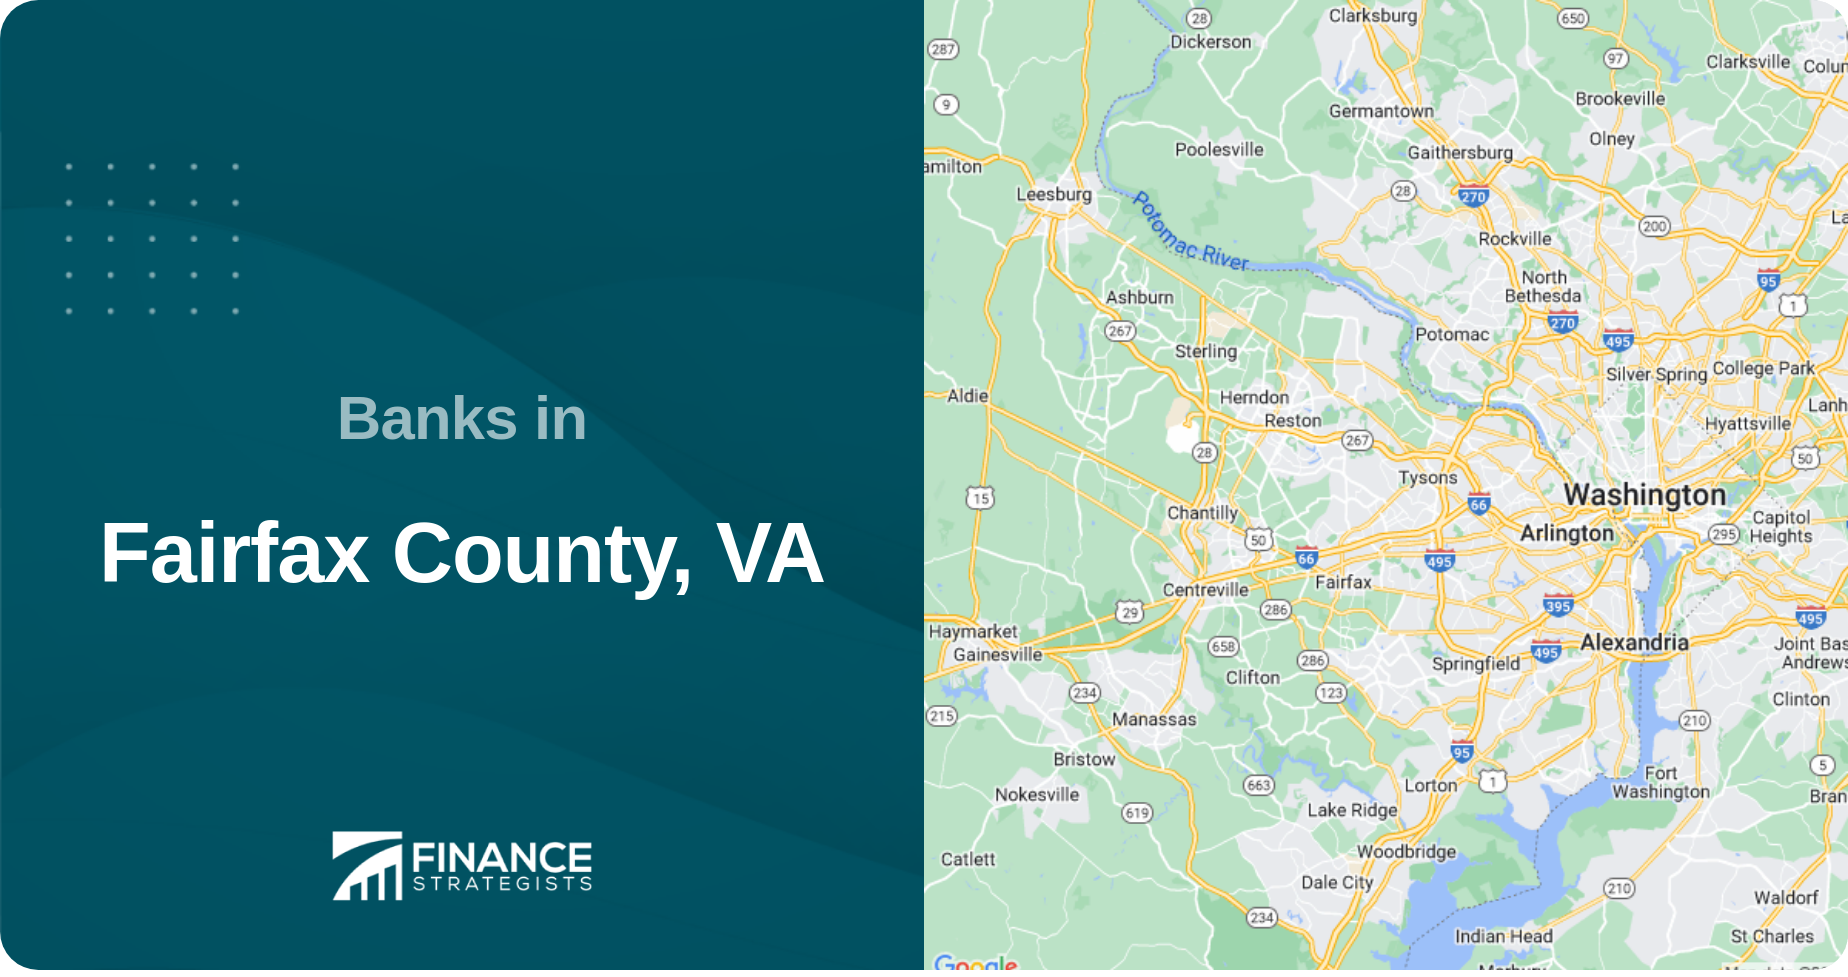 Banks in Fairfax County, VA